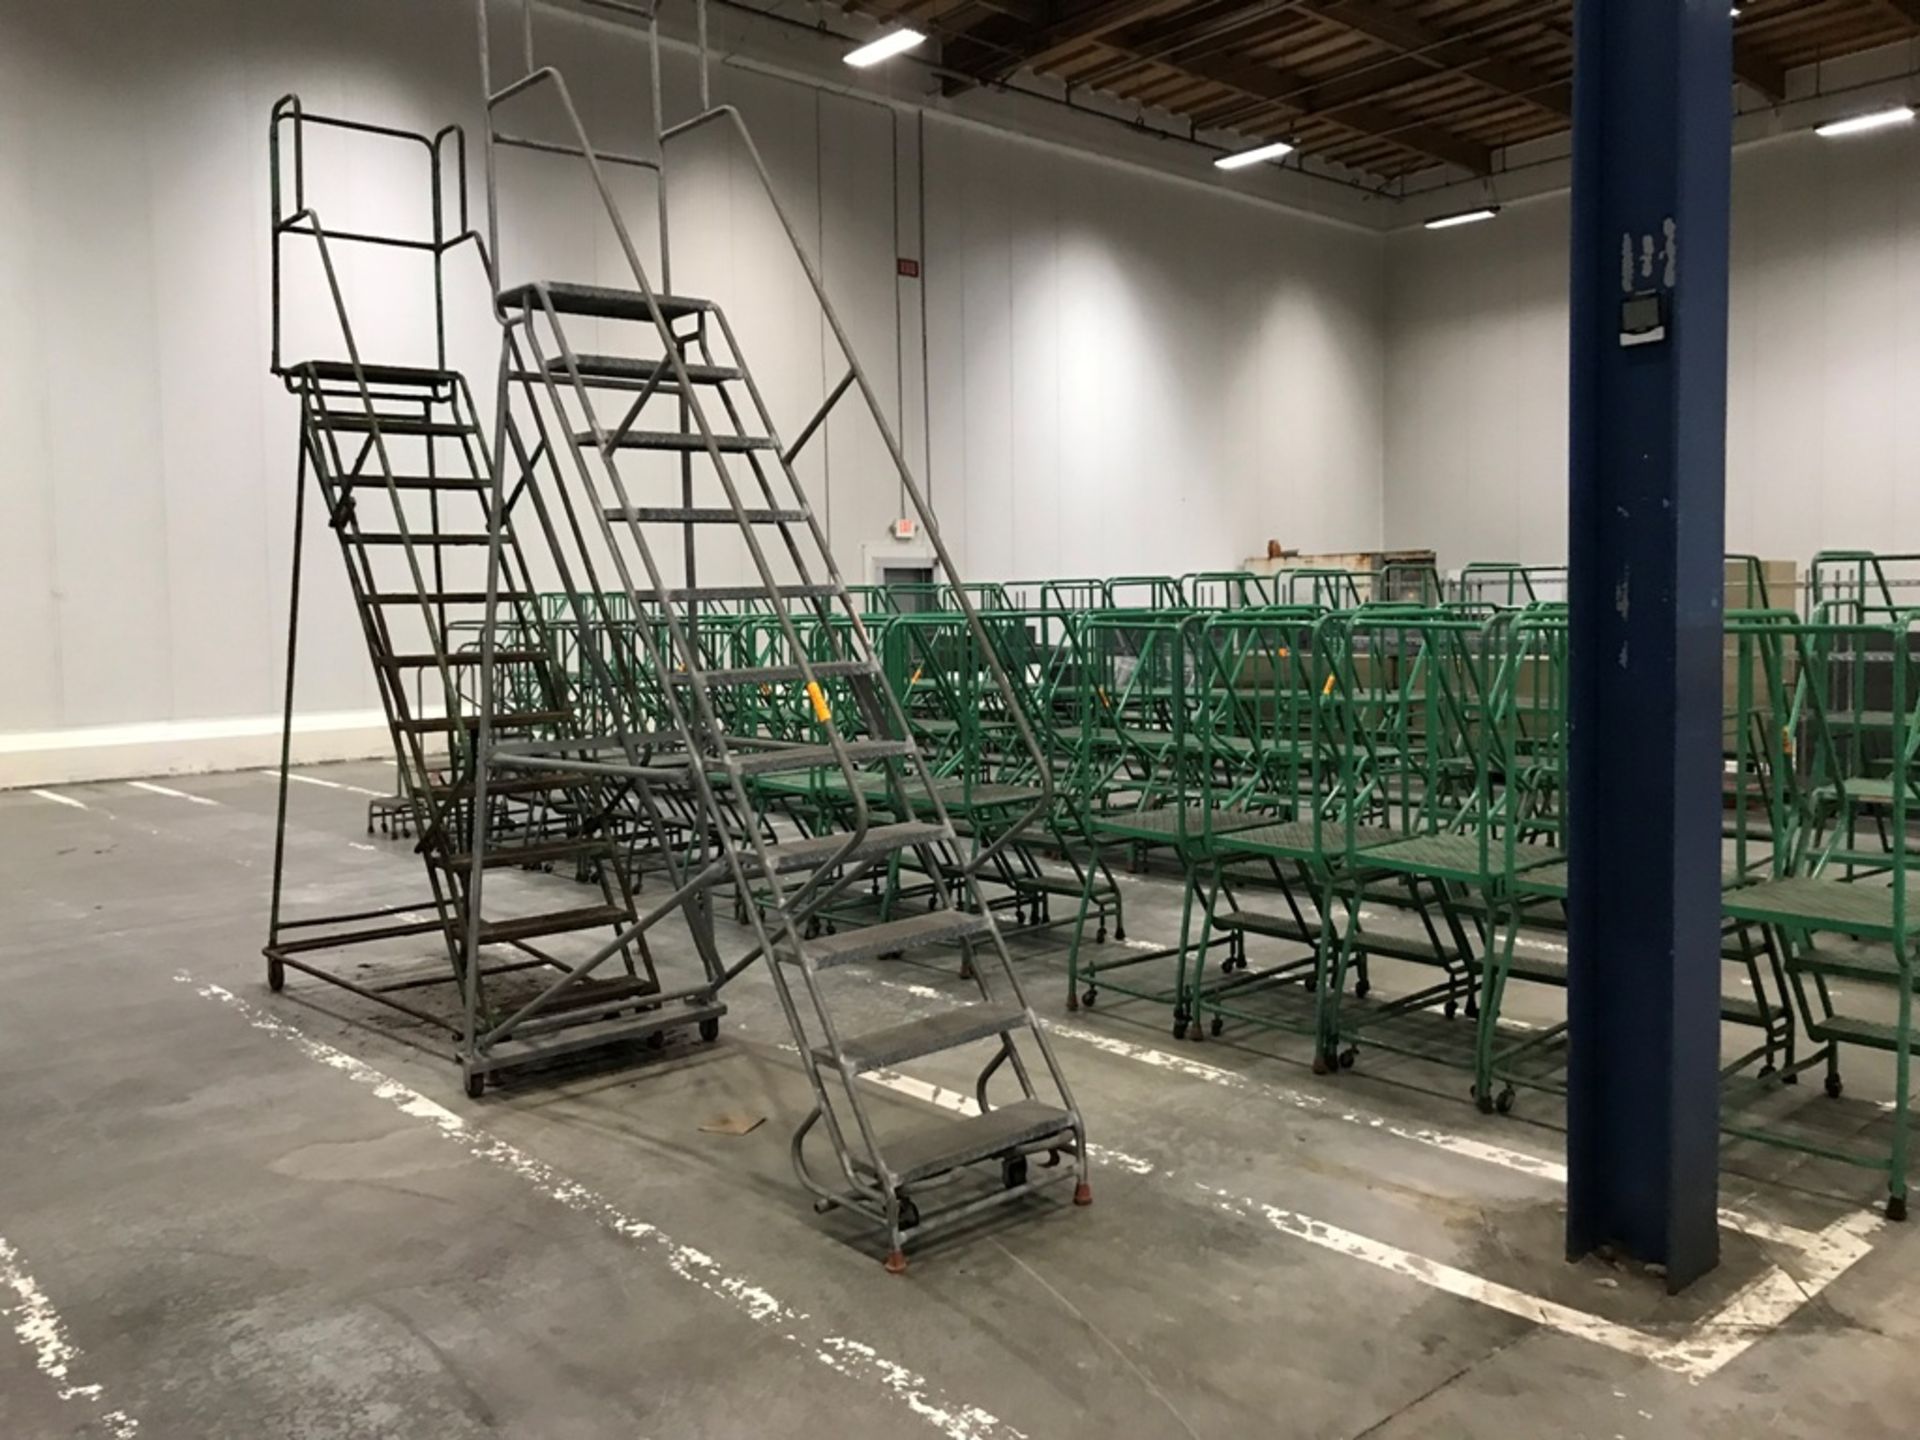 [Lot] (2) 11-step mobile safety ladders, [Location: 12801 Excelsior St., Santa Fe Springs, CA